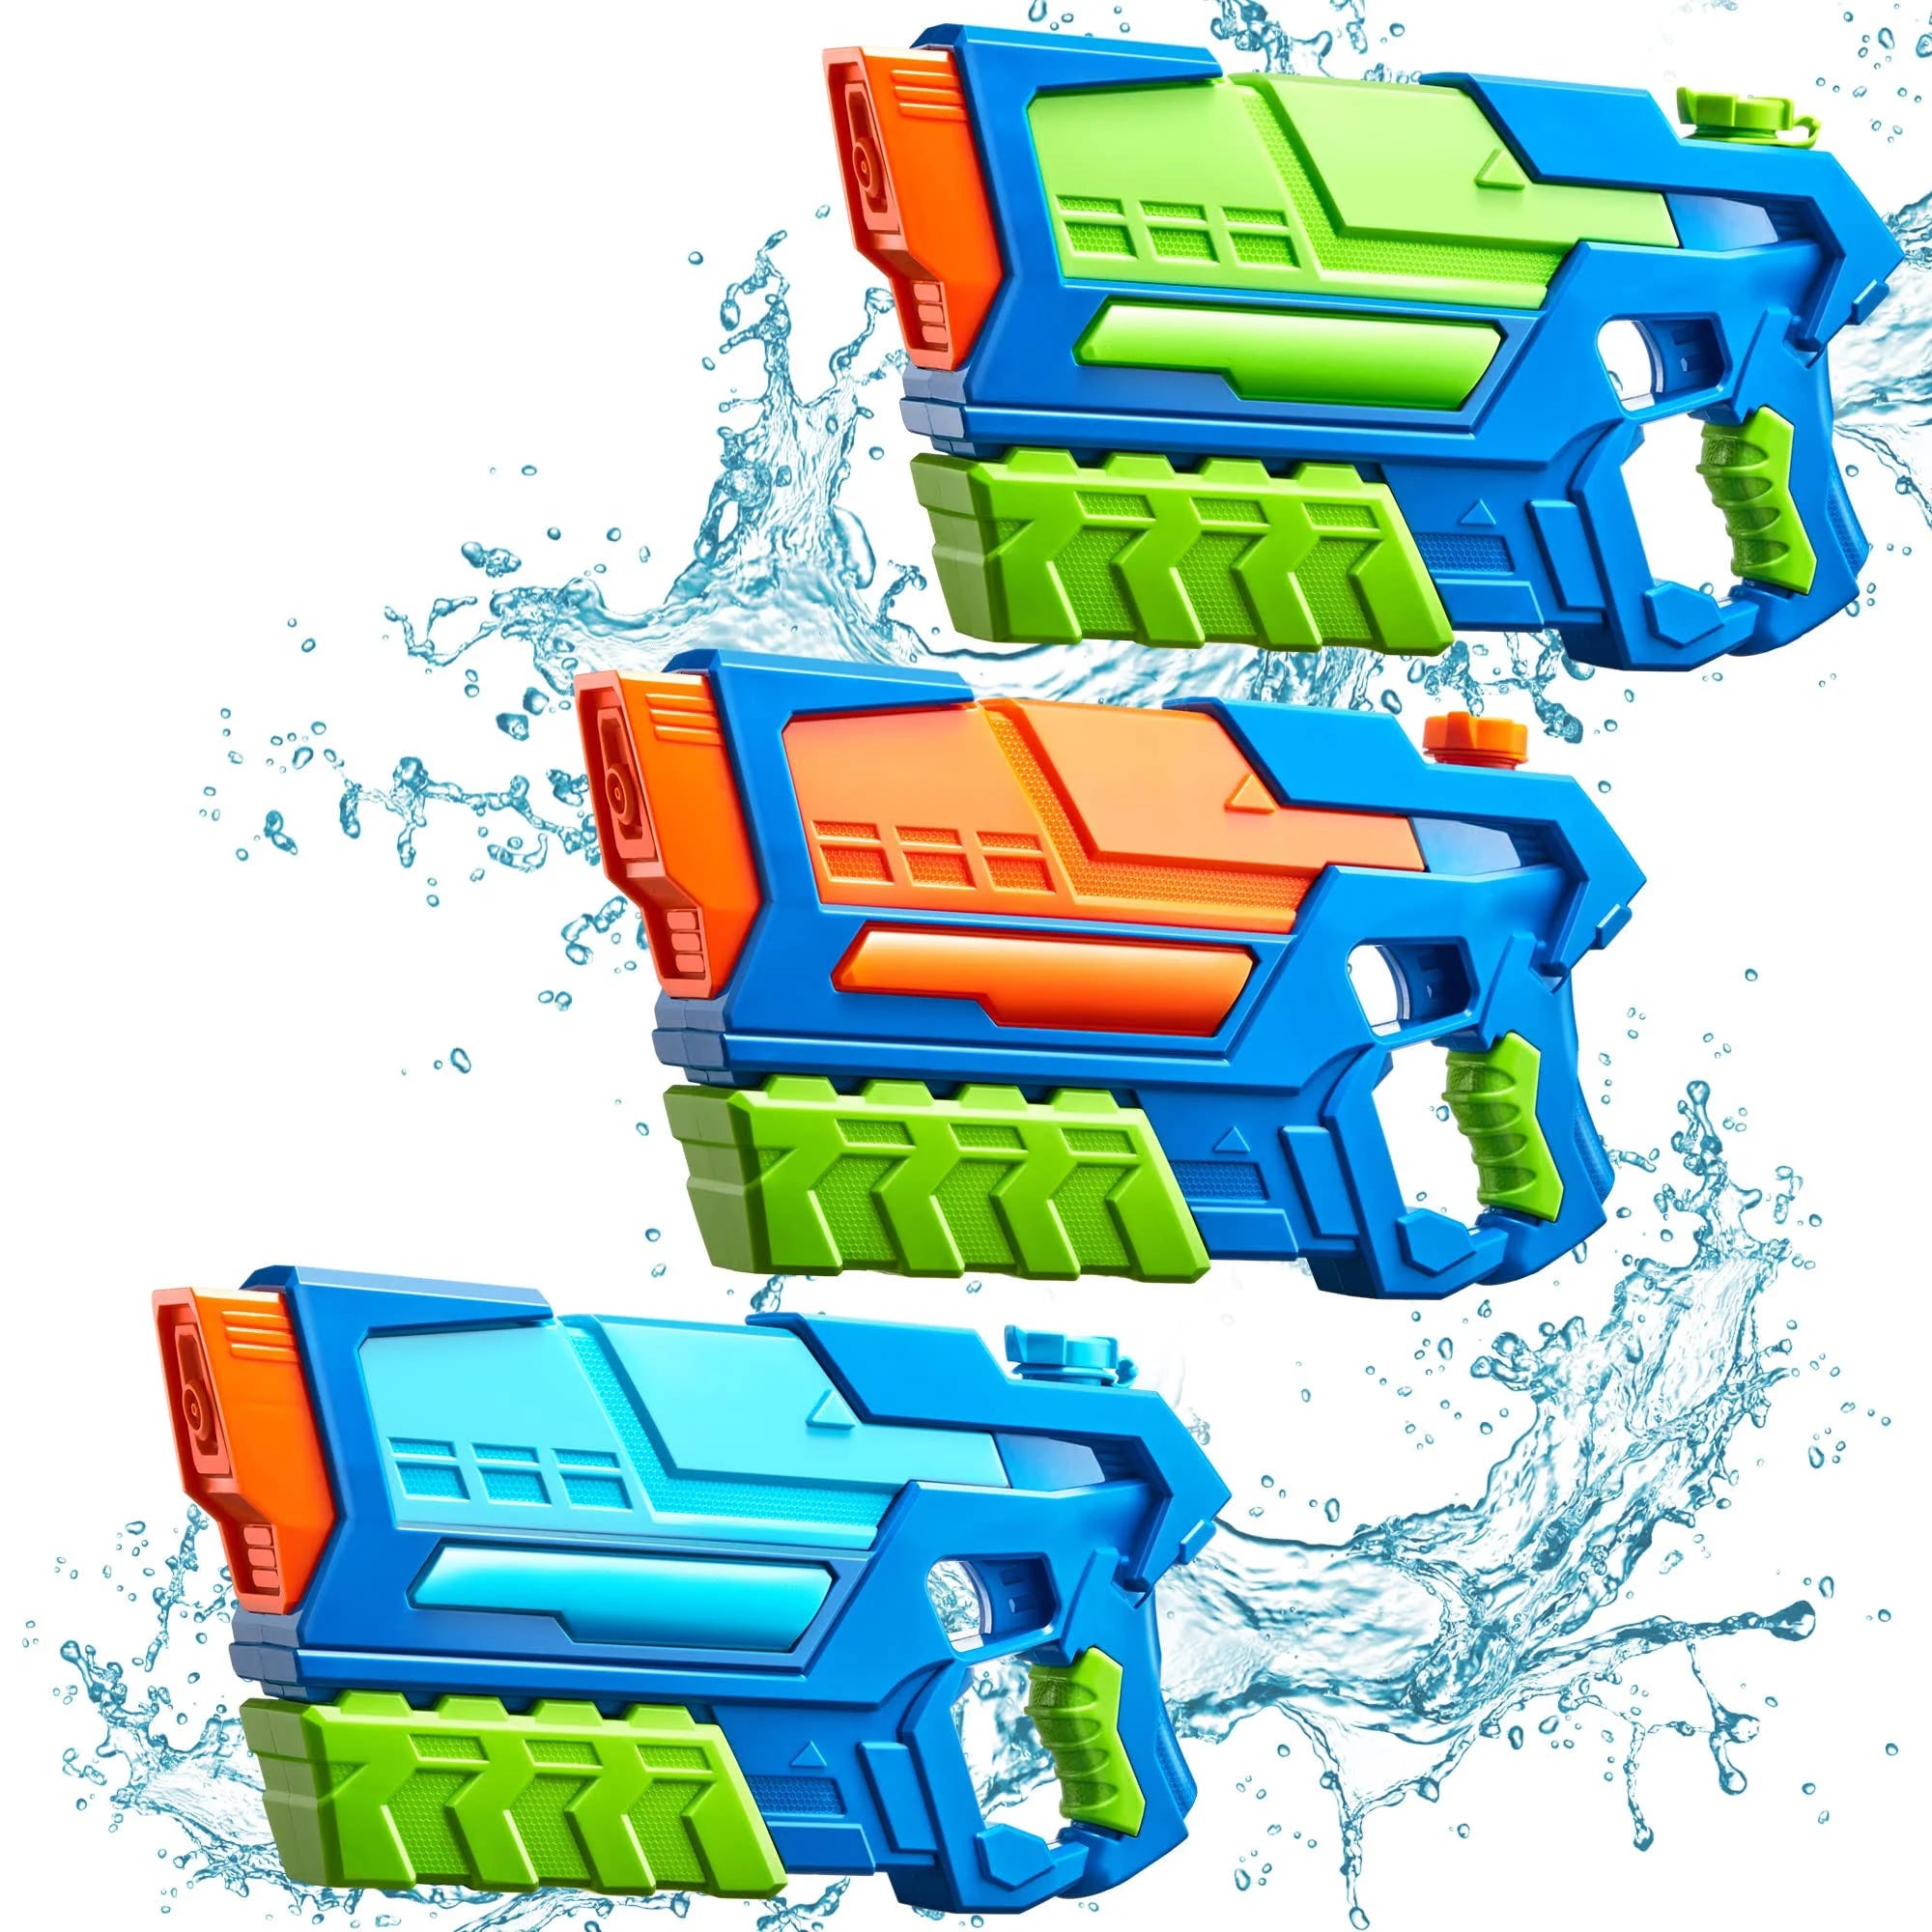 JOYIN 3-in-1 High Capacity Water Gun Set | Image